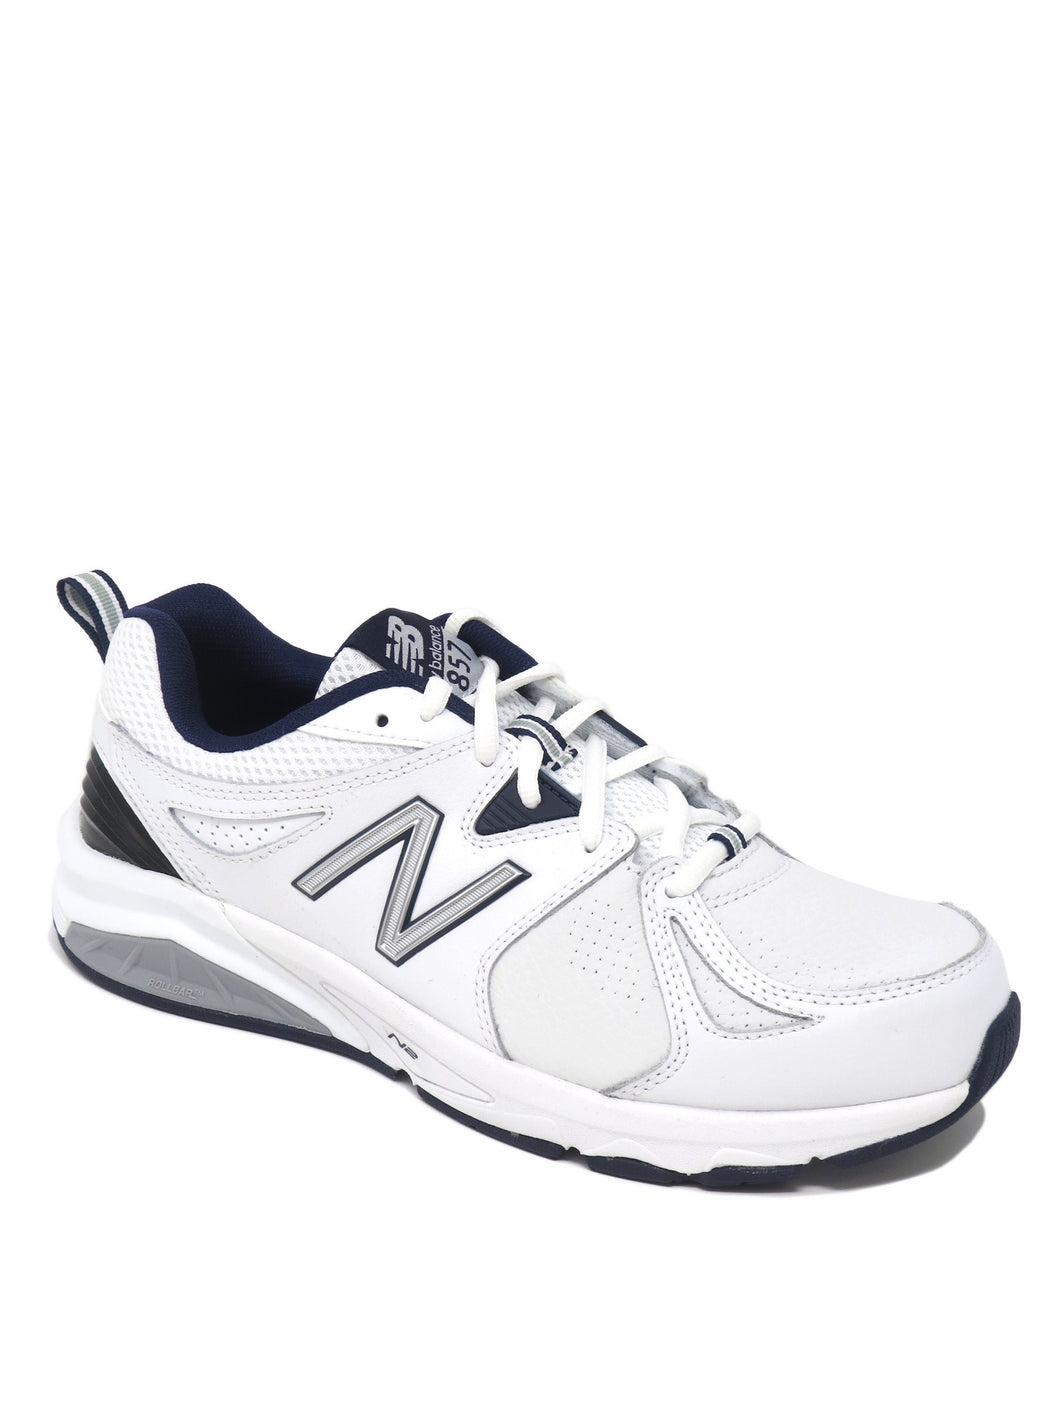 Men's | New Balance | MX857WN2 | Training Shoe | White/Navy